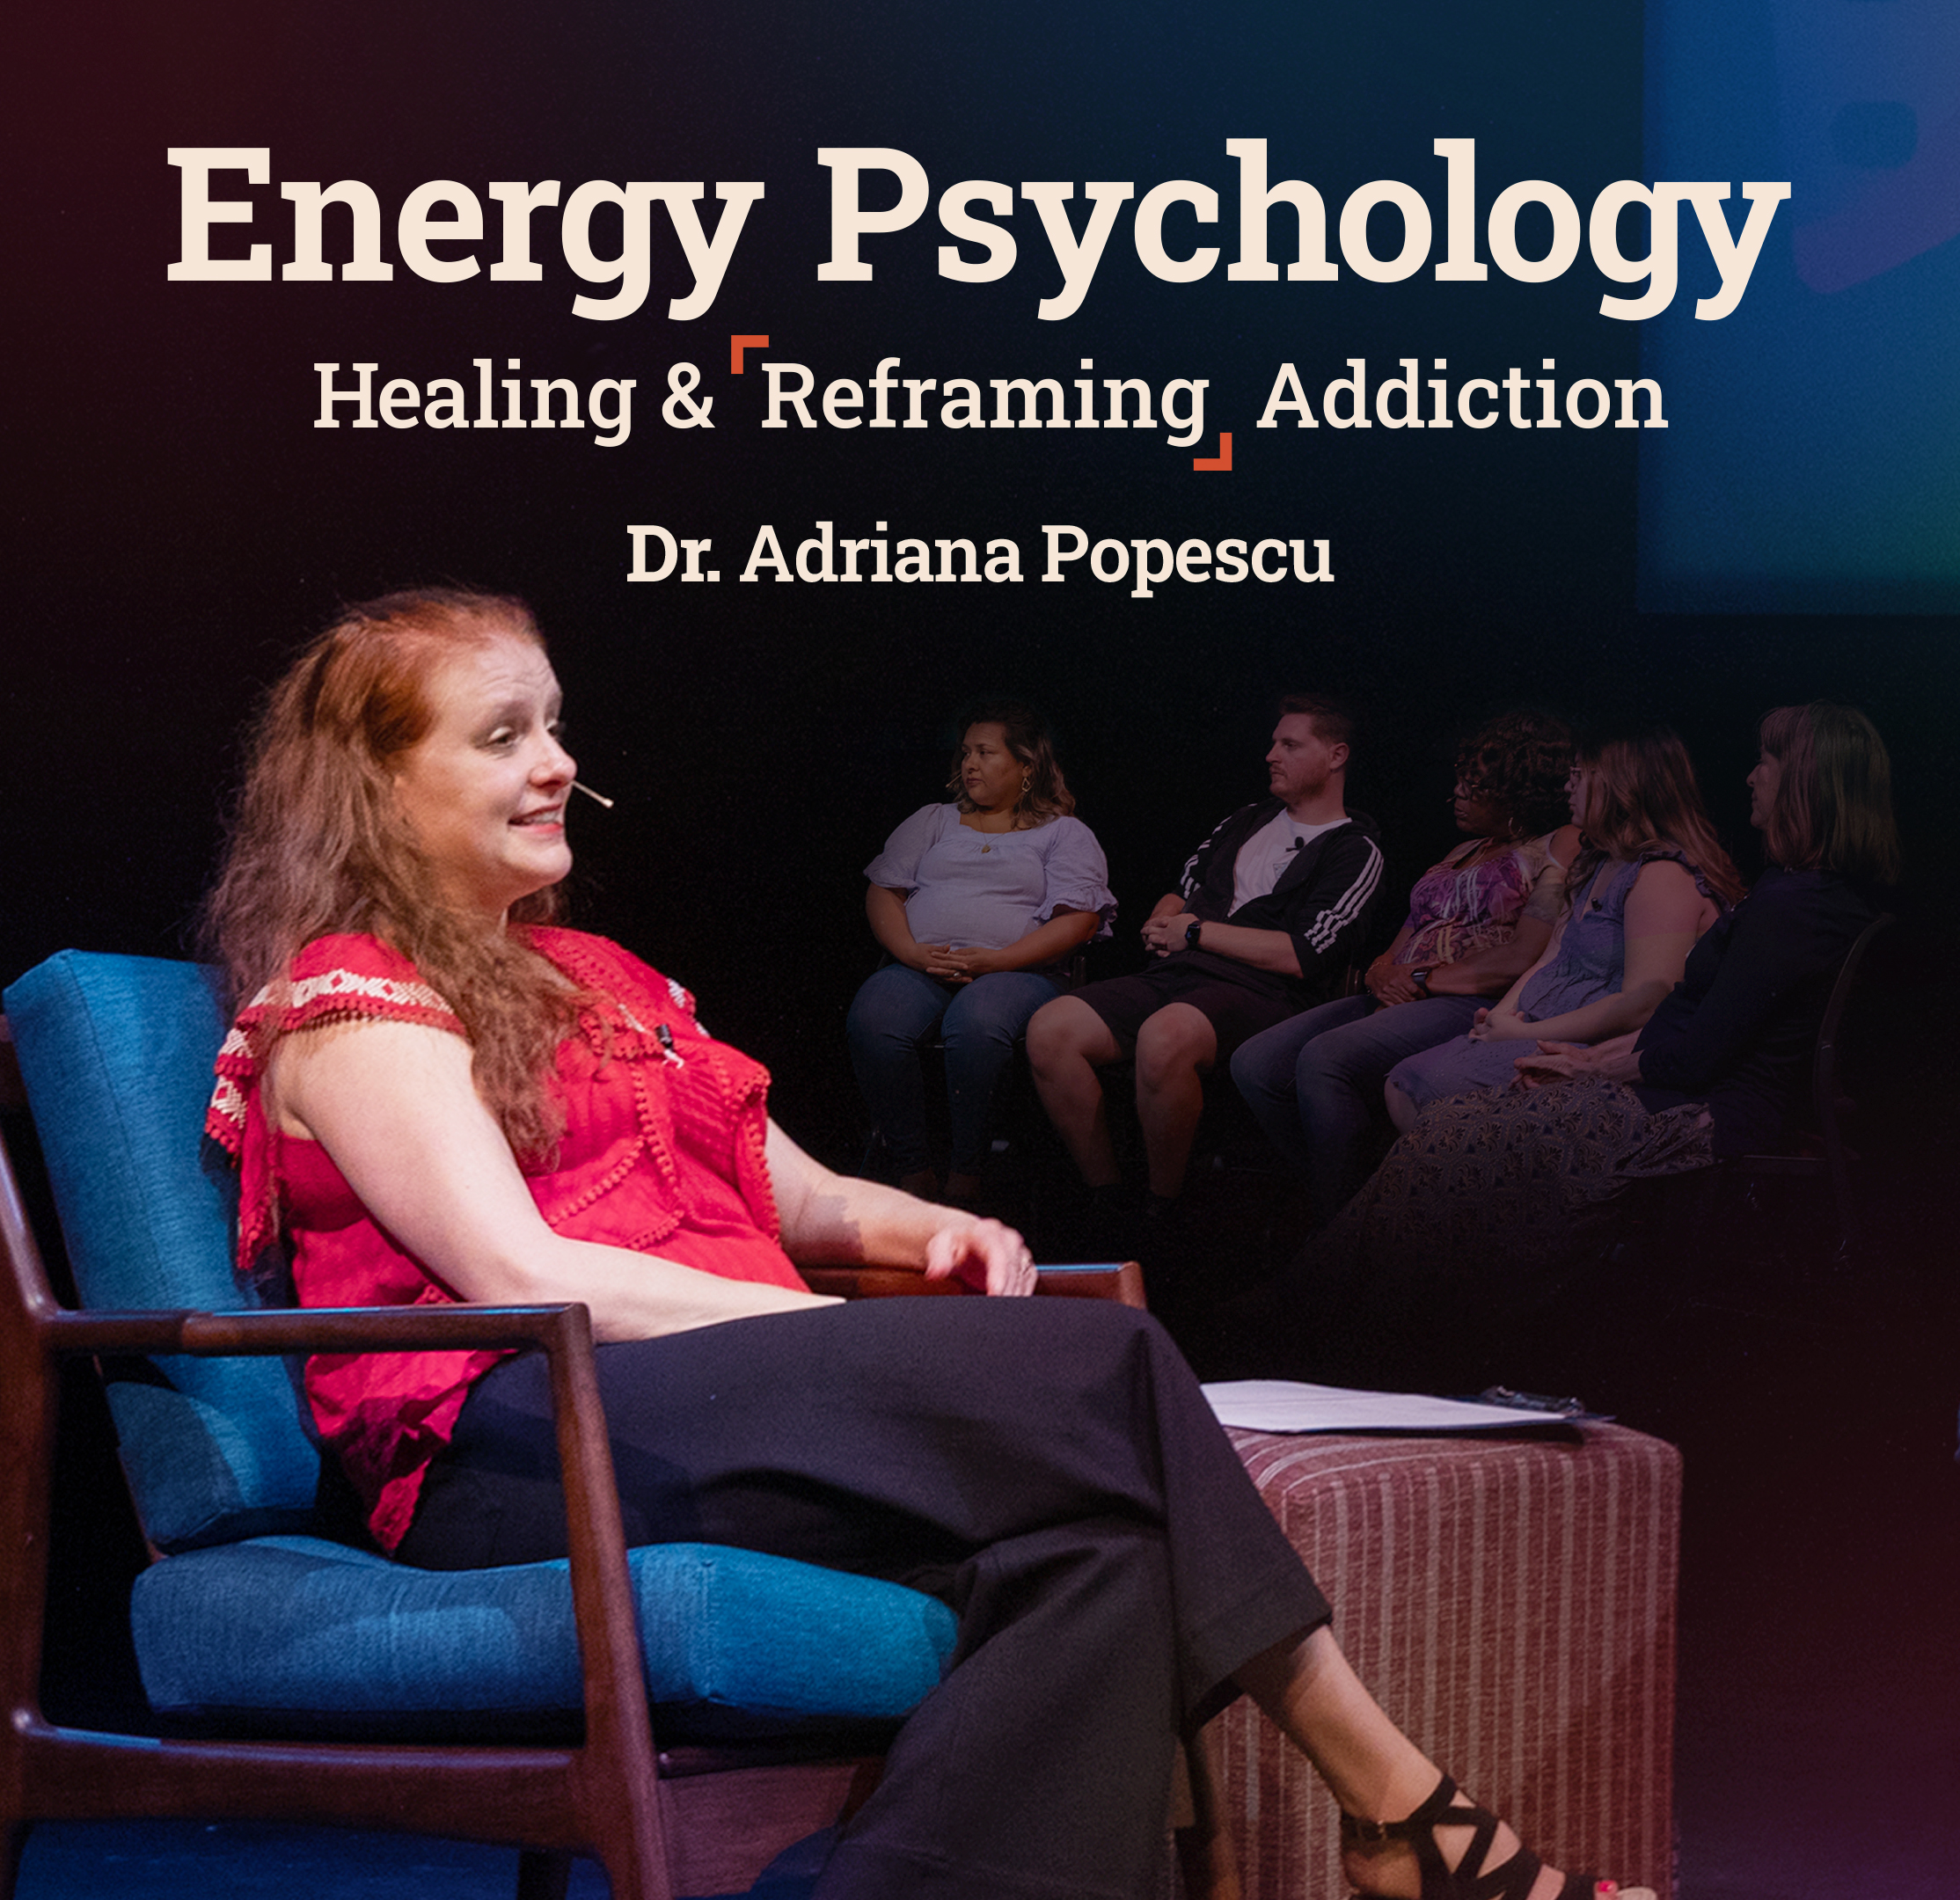 Energy Psychology: Healing & Reframing Addiction